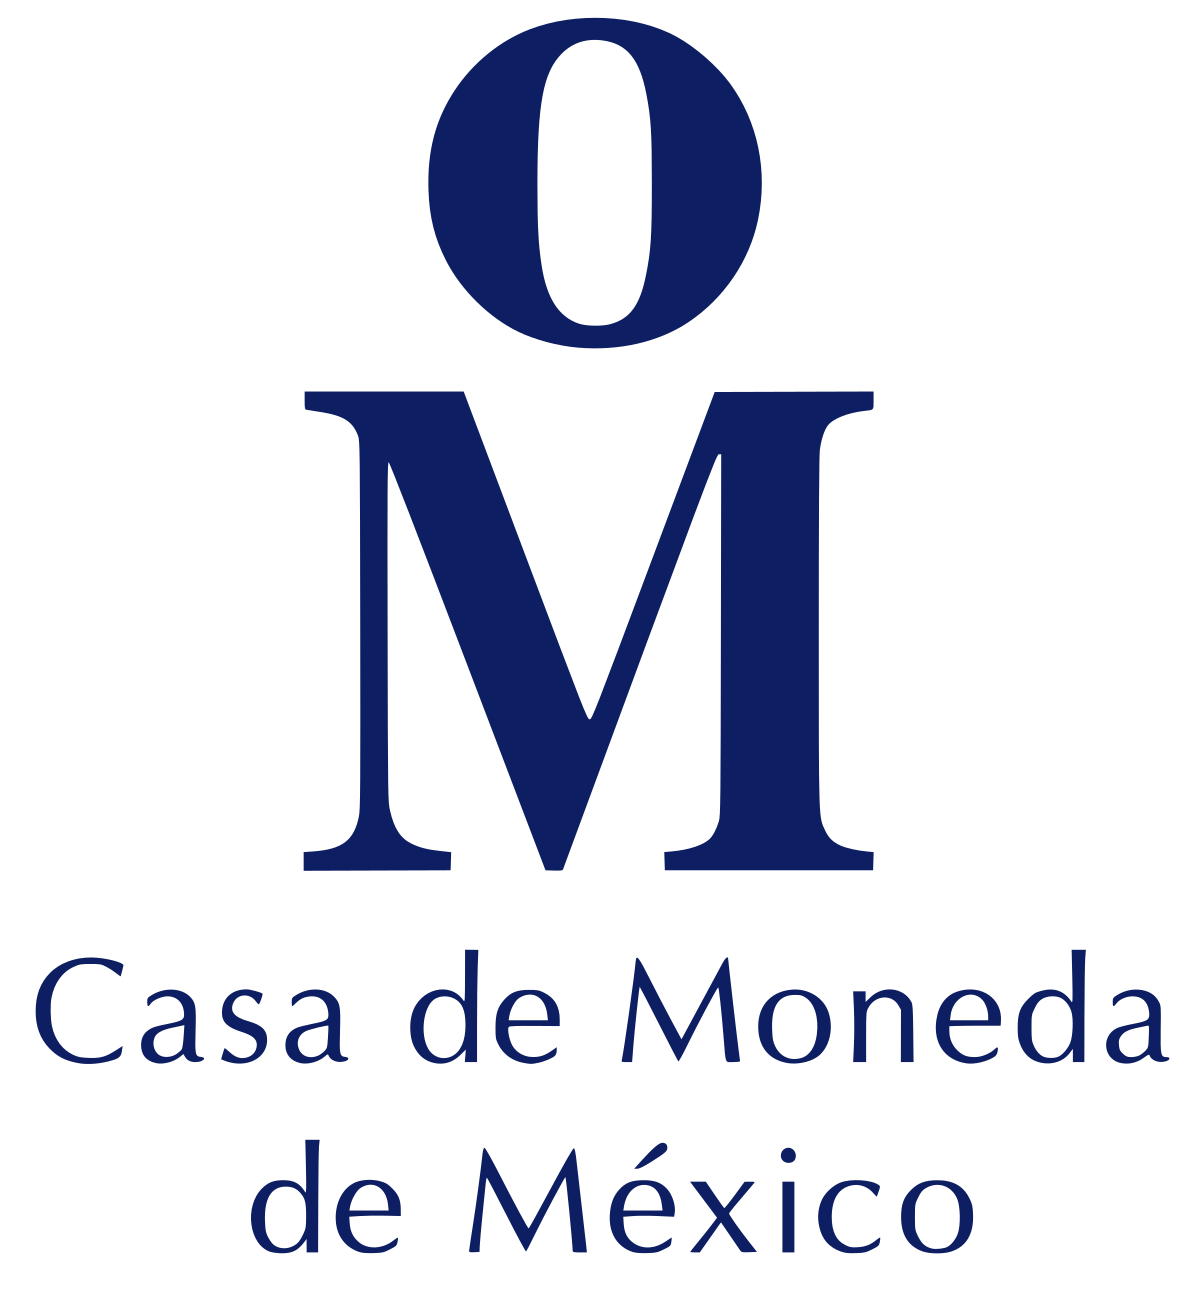 Casa de Moneda de México - Wikipedia, la enciclopedia libre